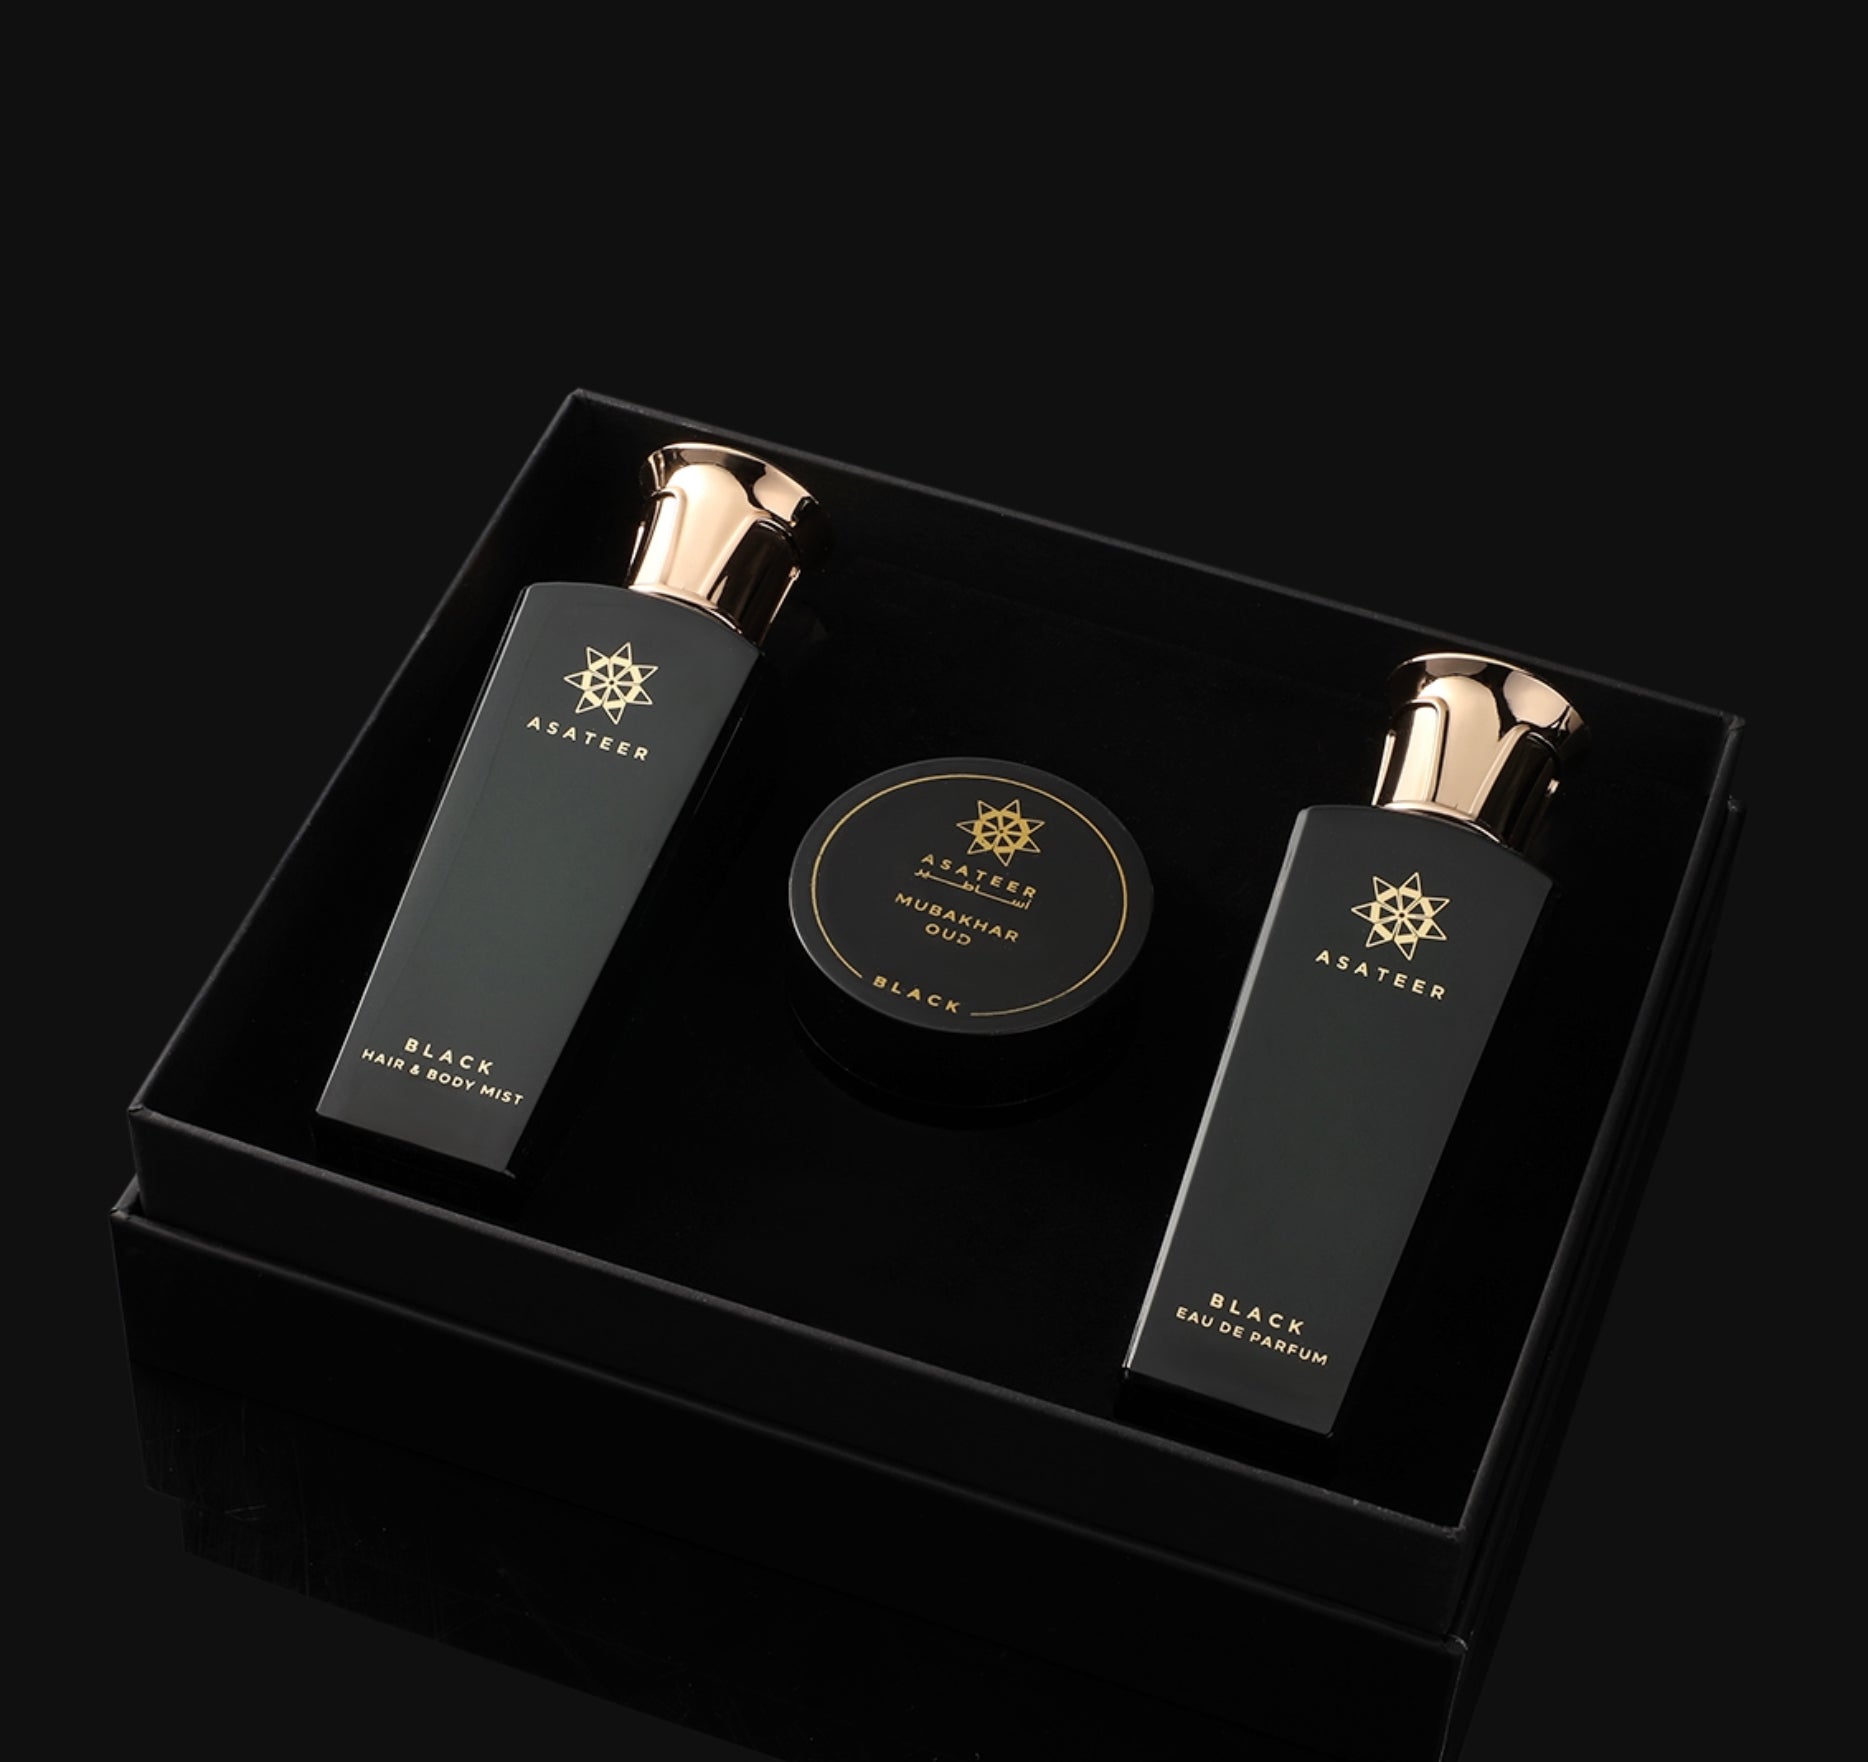 Asateer Black Perfume Collection - 3 pcs